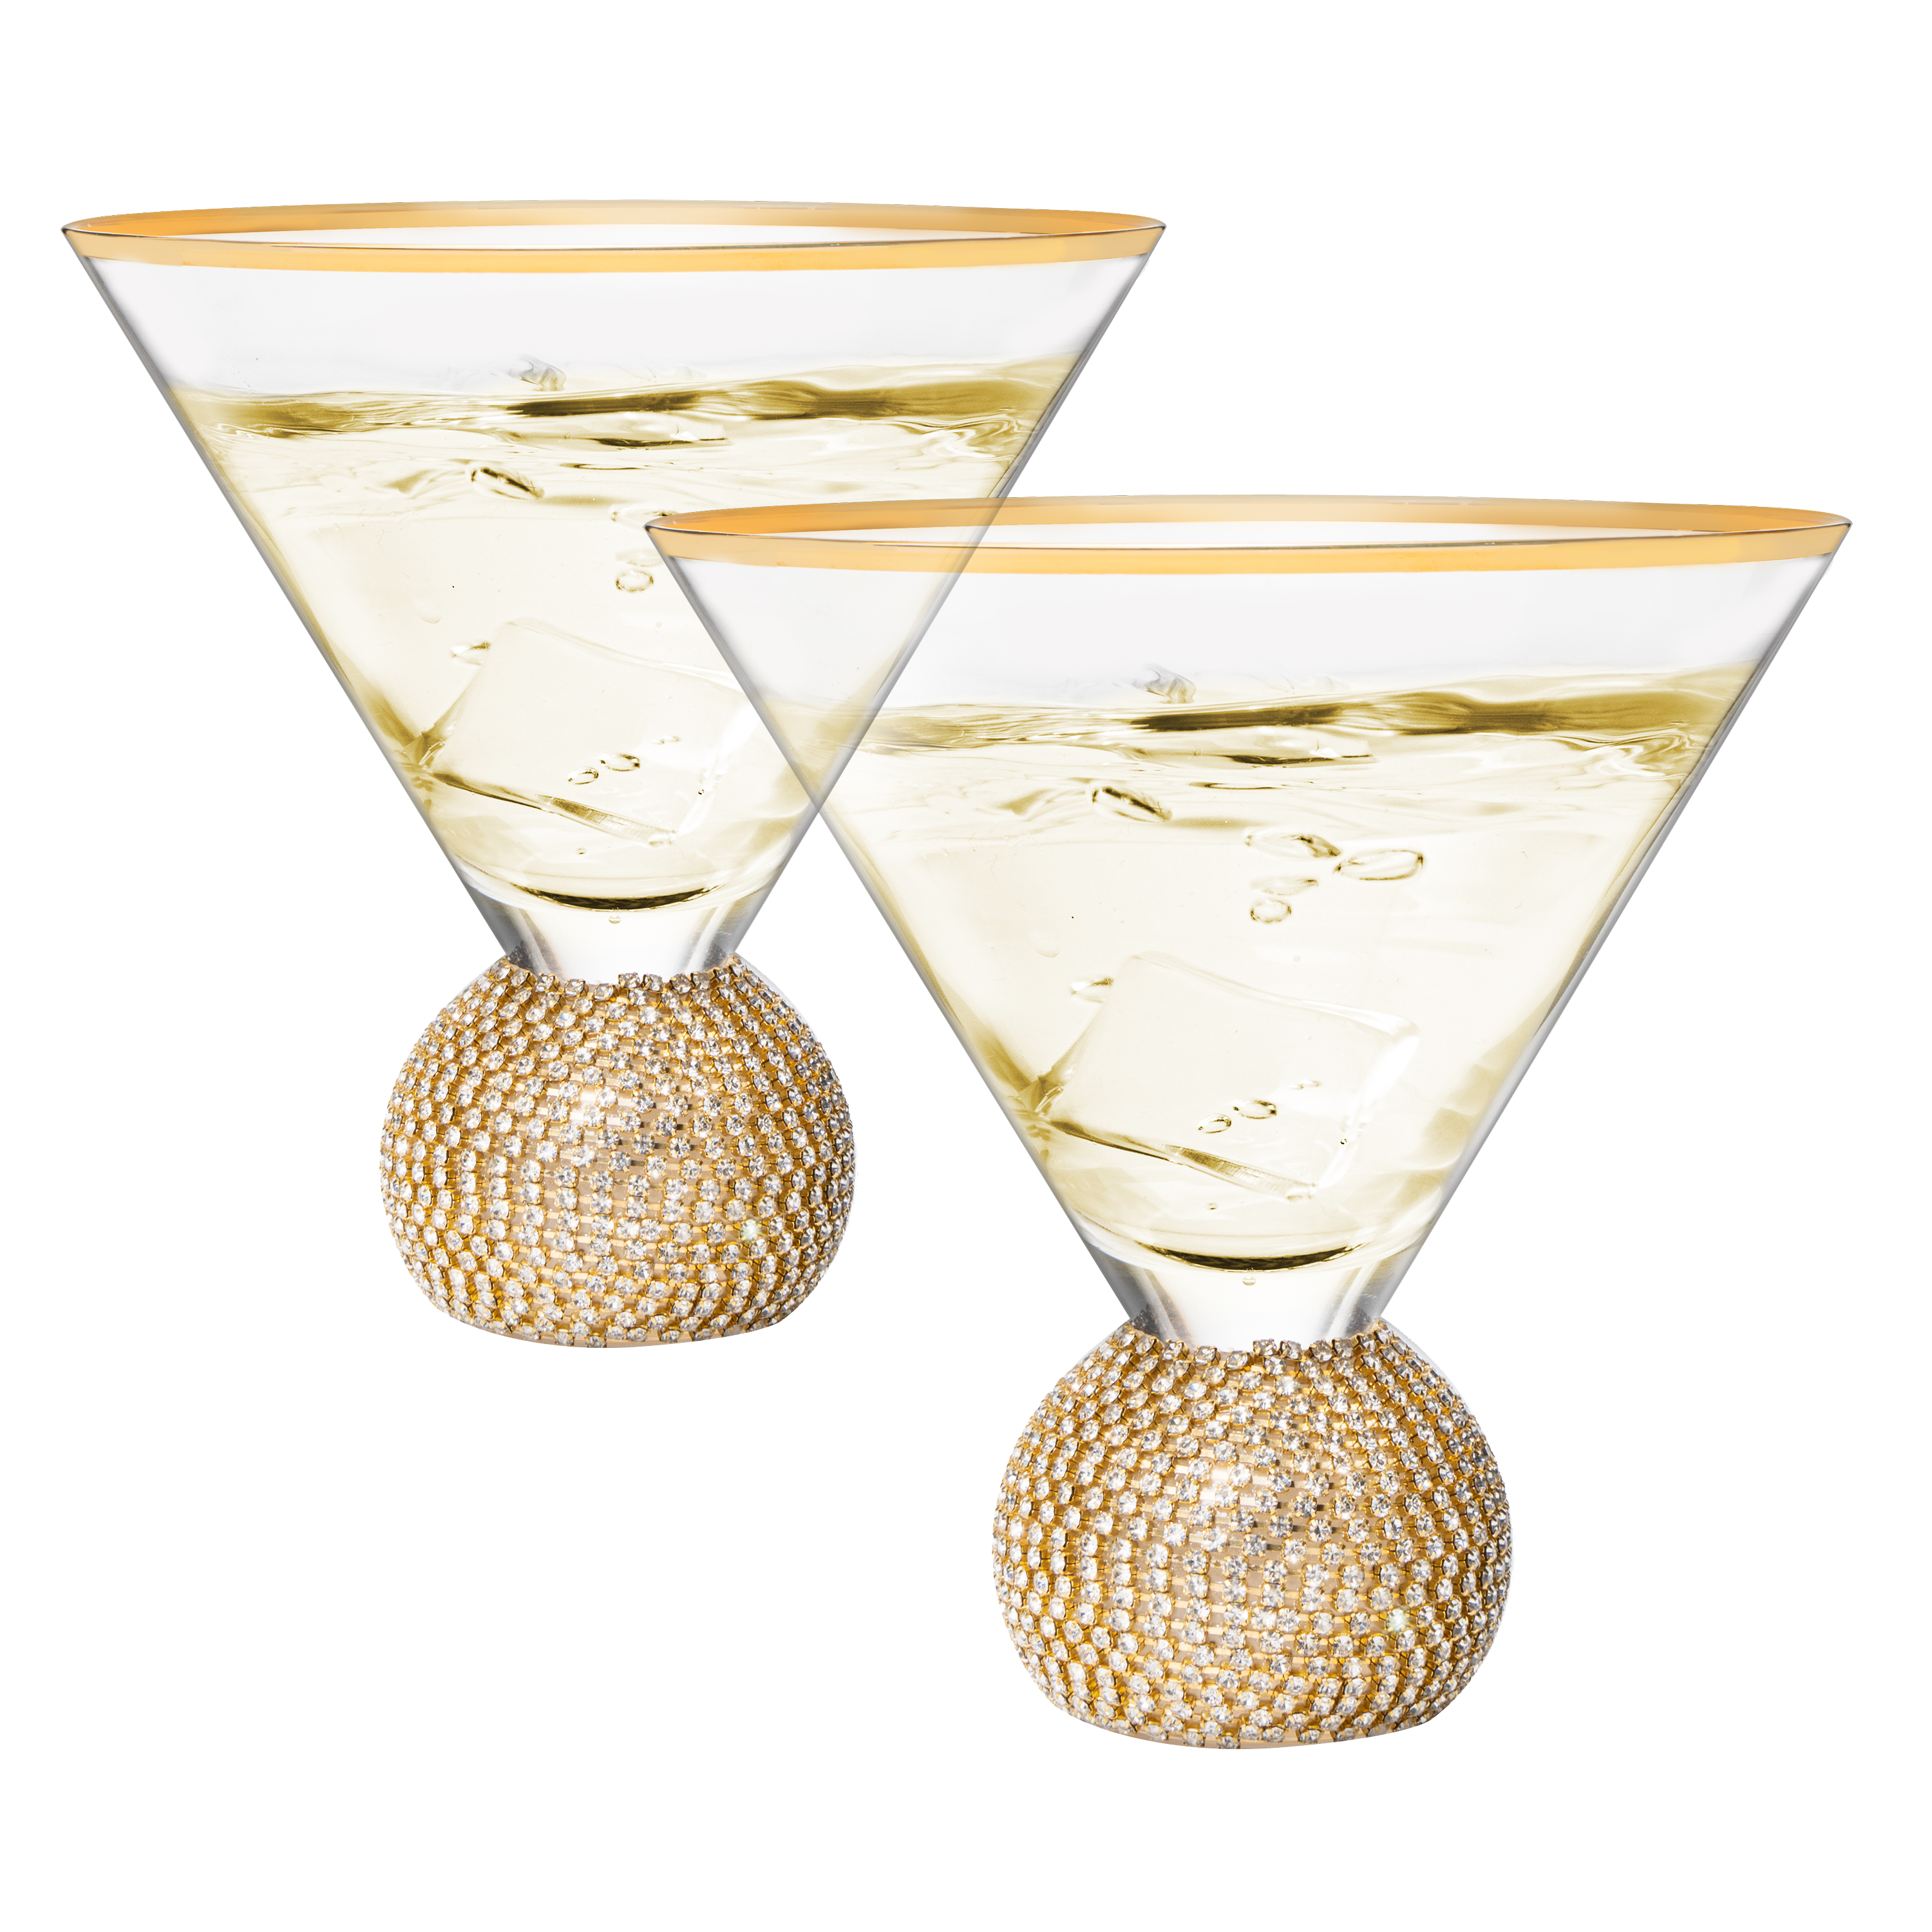 Colored Art Deco Cocktail Glasses, Gold Rimmed Vintage Martini Set, Pink Cocktail  Glass, Barware, Glassware Set, Cocktail Party, Bridesmaid 